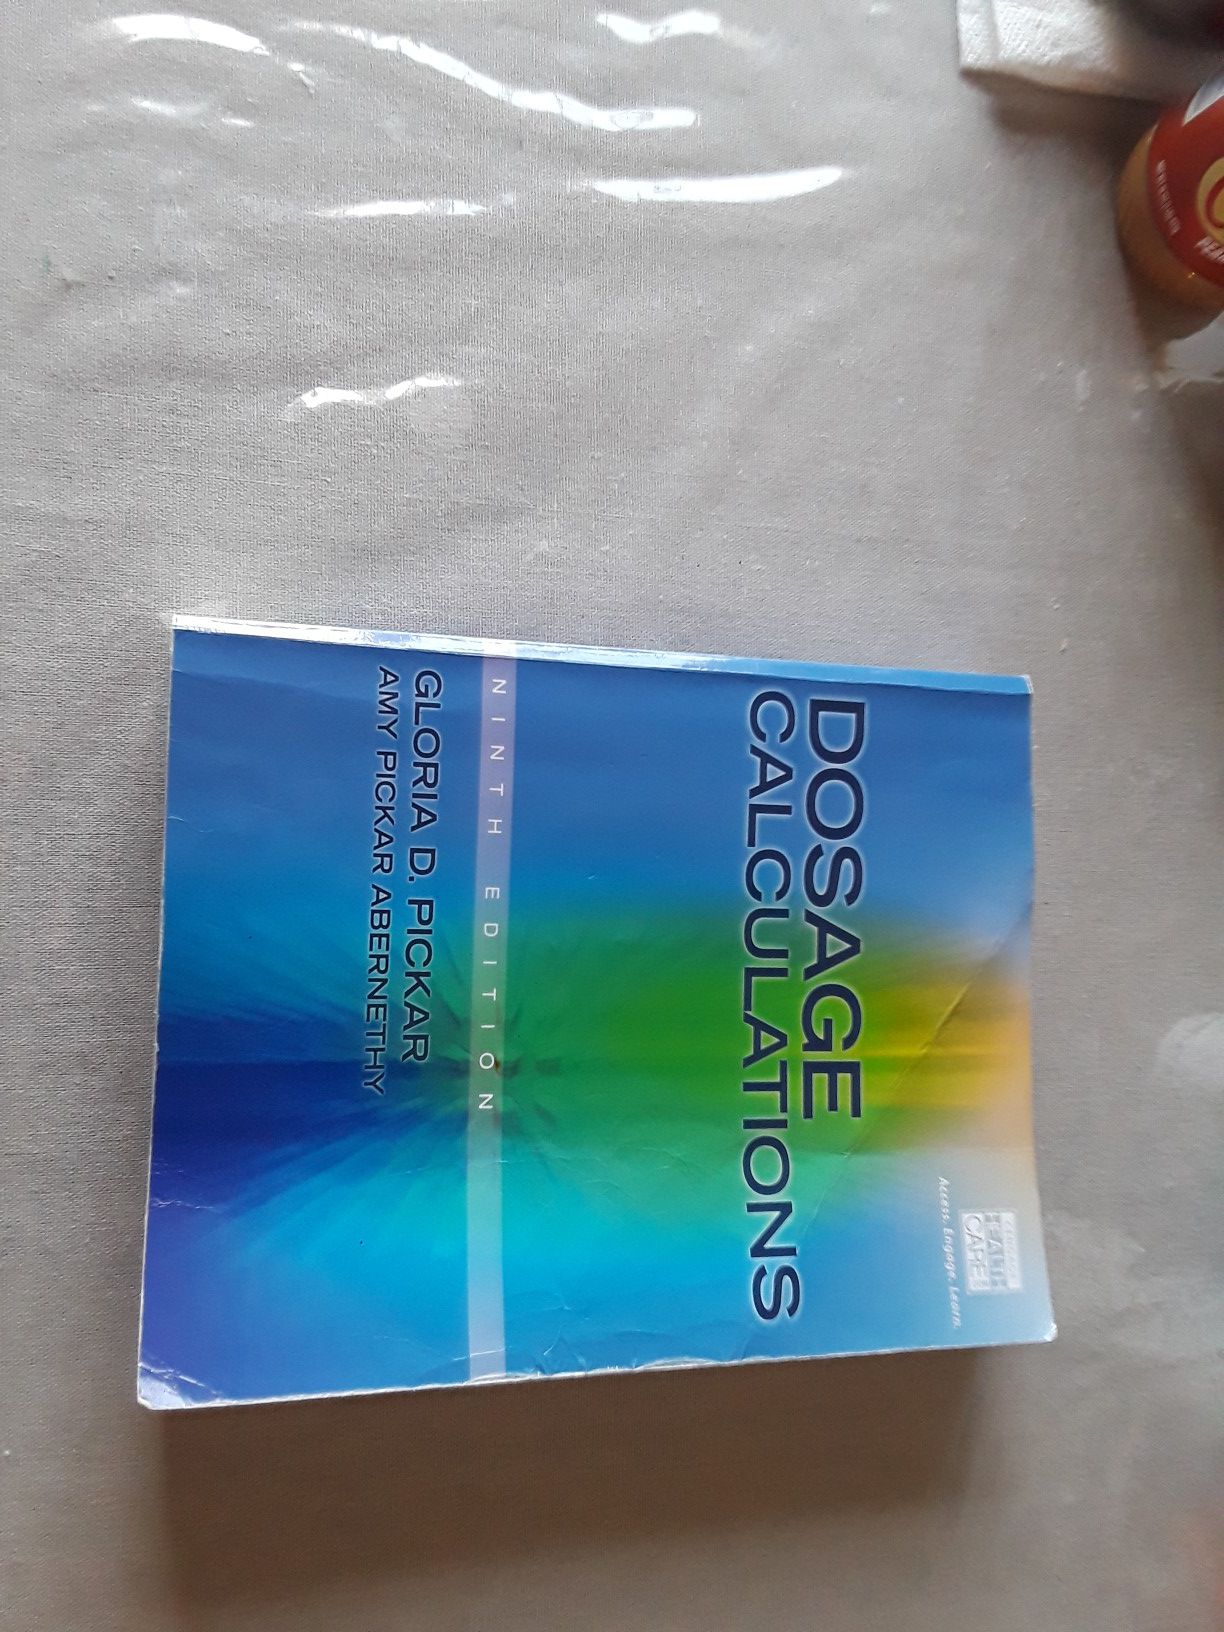 Dosage calculations Book